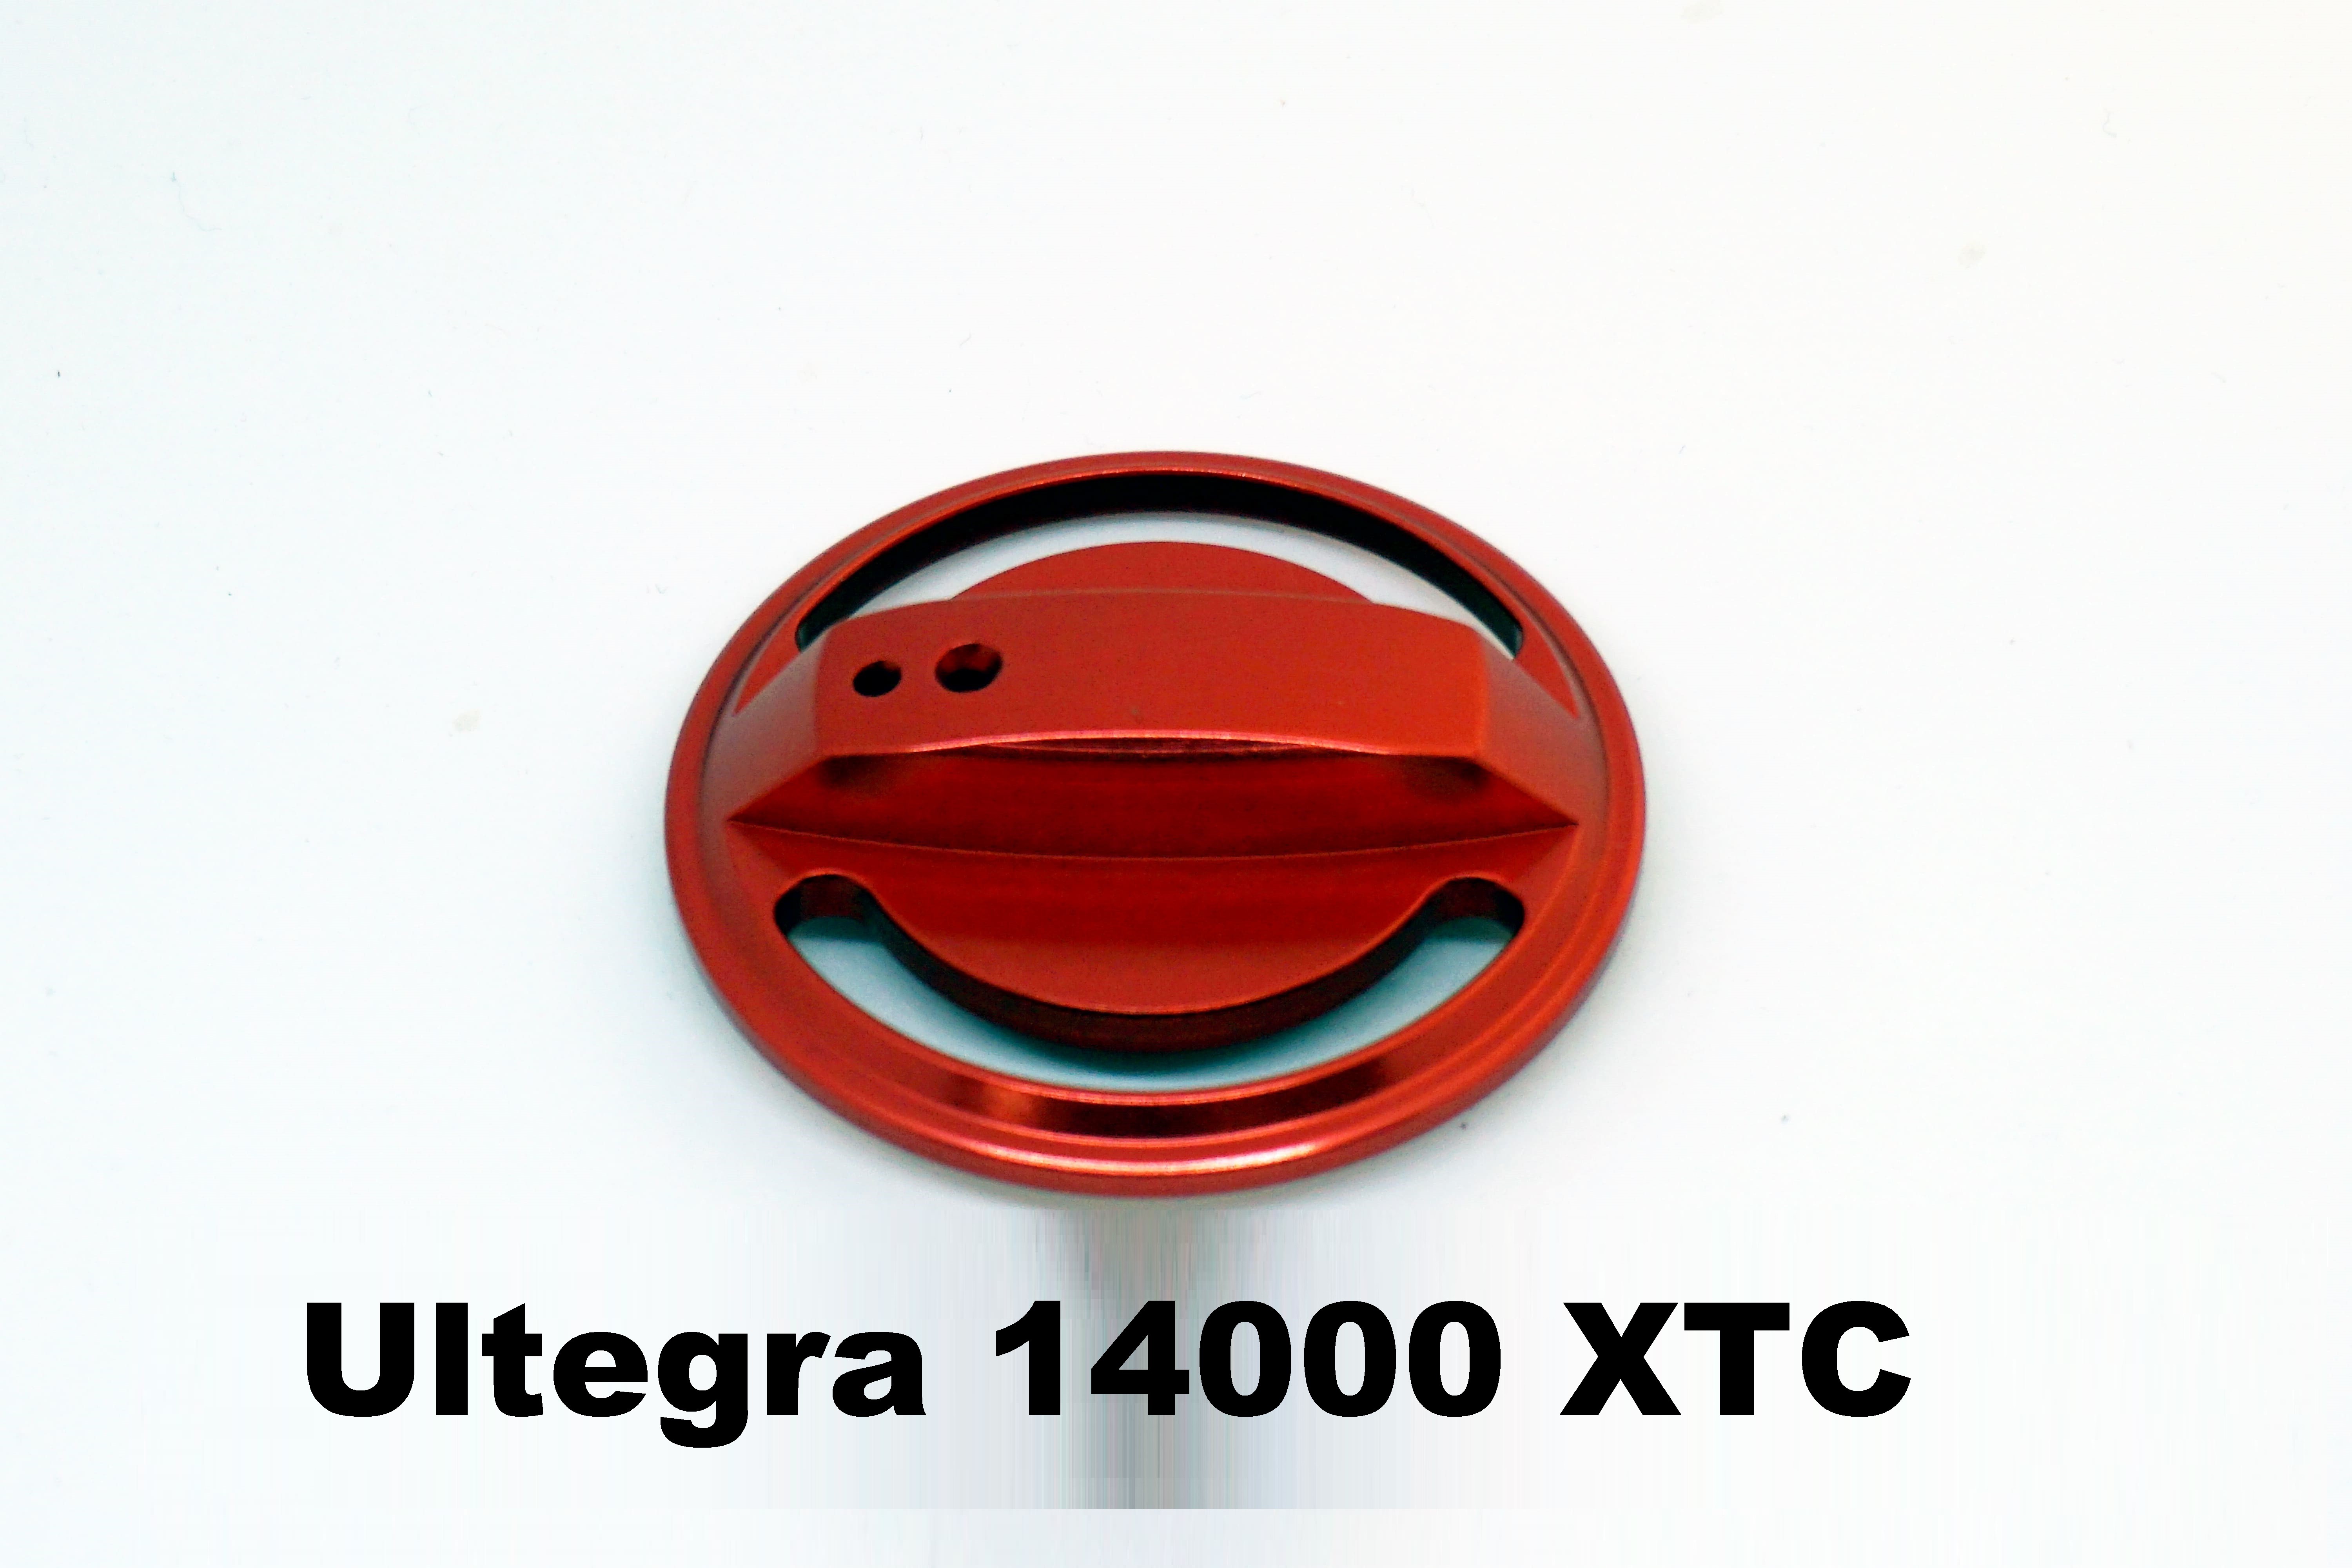 Drag Knob for Ultegra 14000 XTC